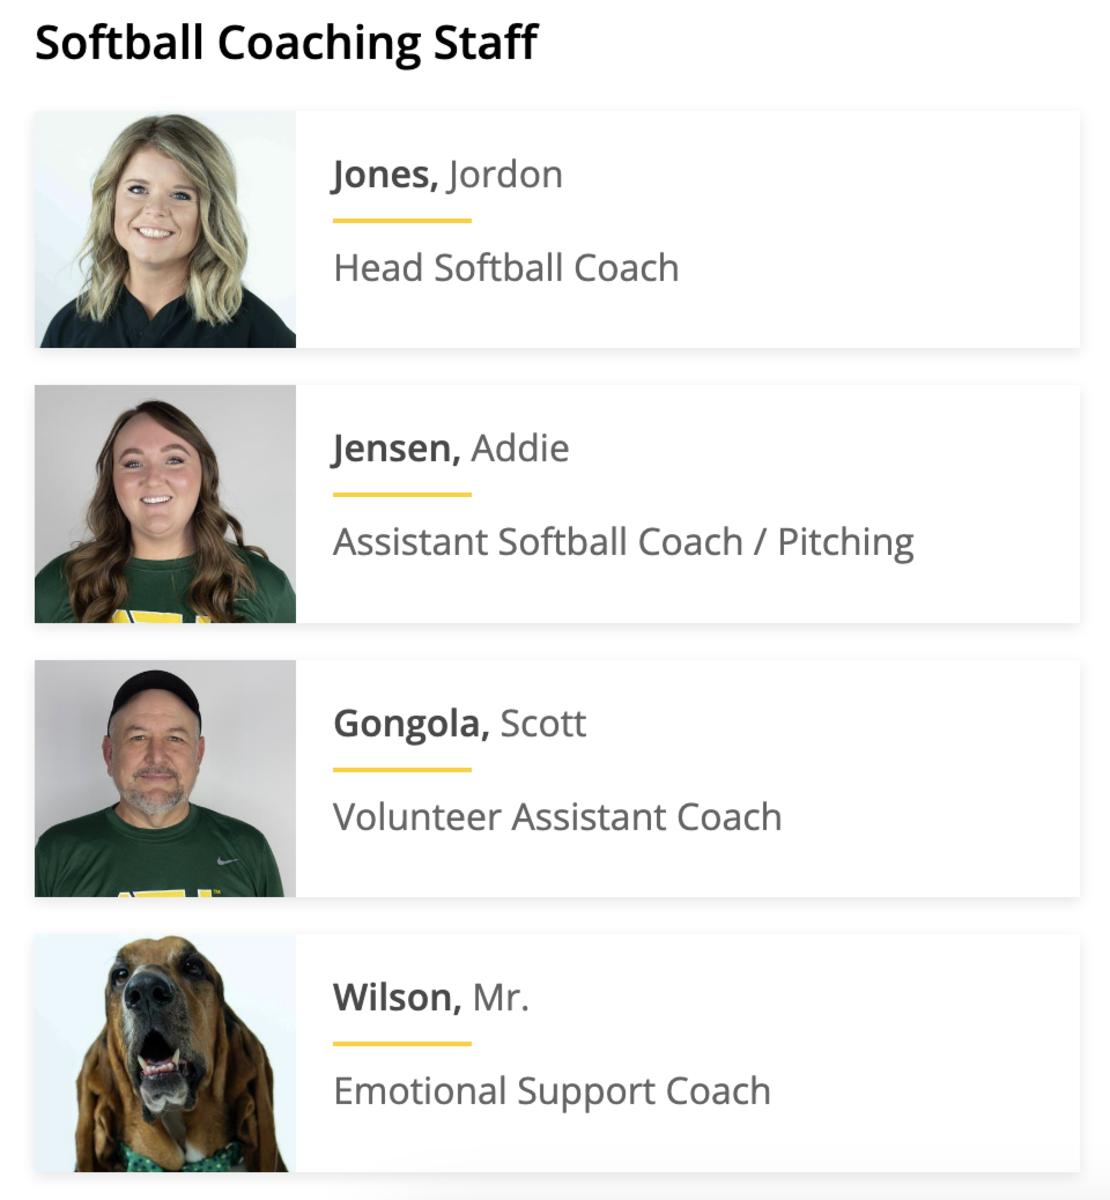 Mr. Wilson is listed on Arkansas Tech softball’s official roster.